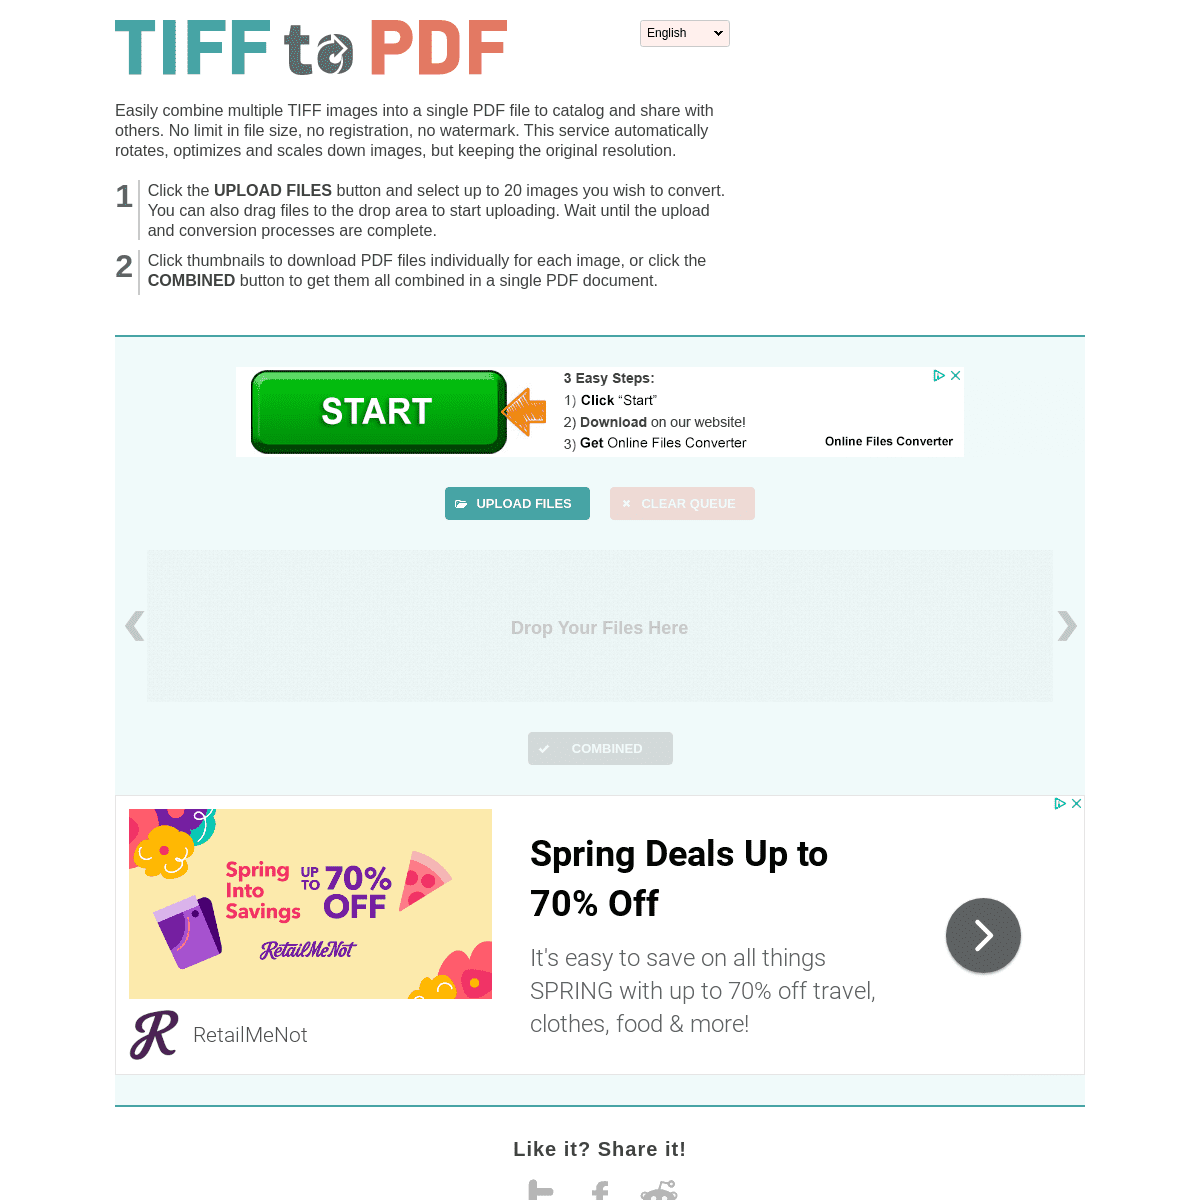 A complete backup of tiff2pdf.com